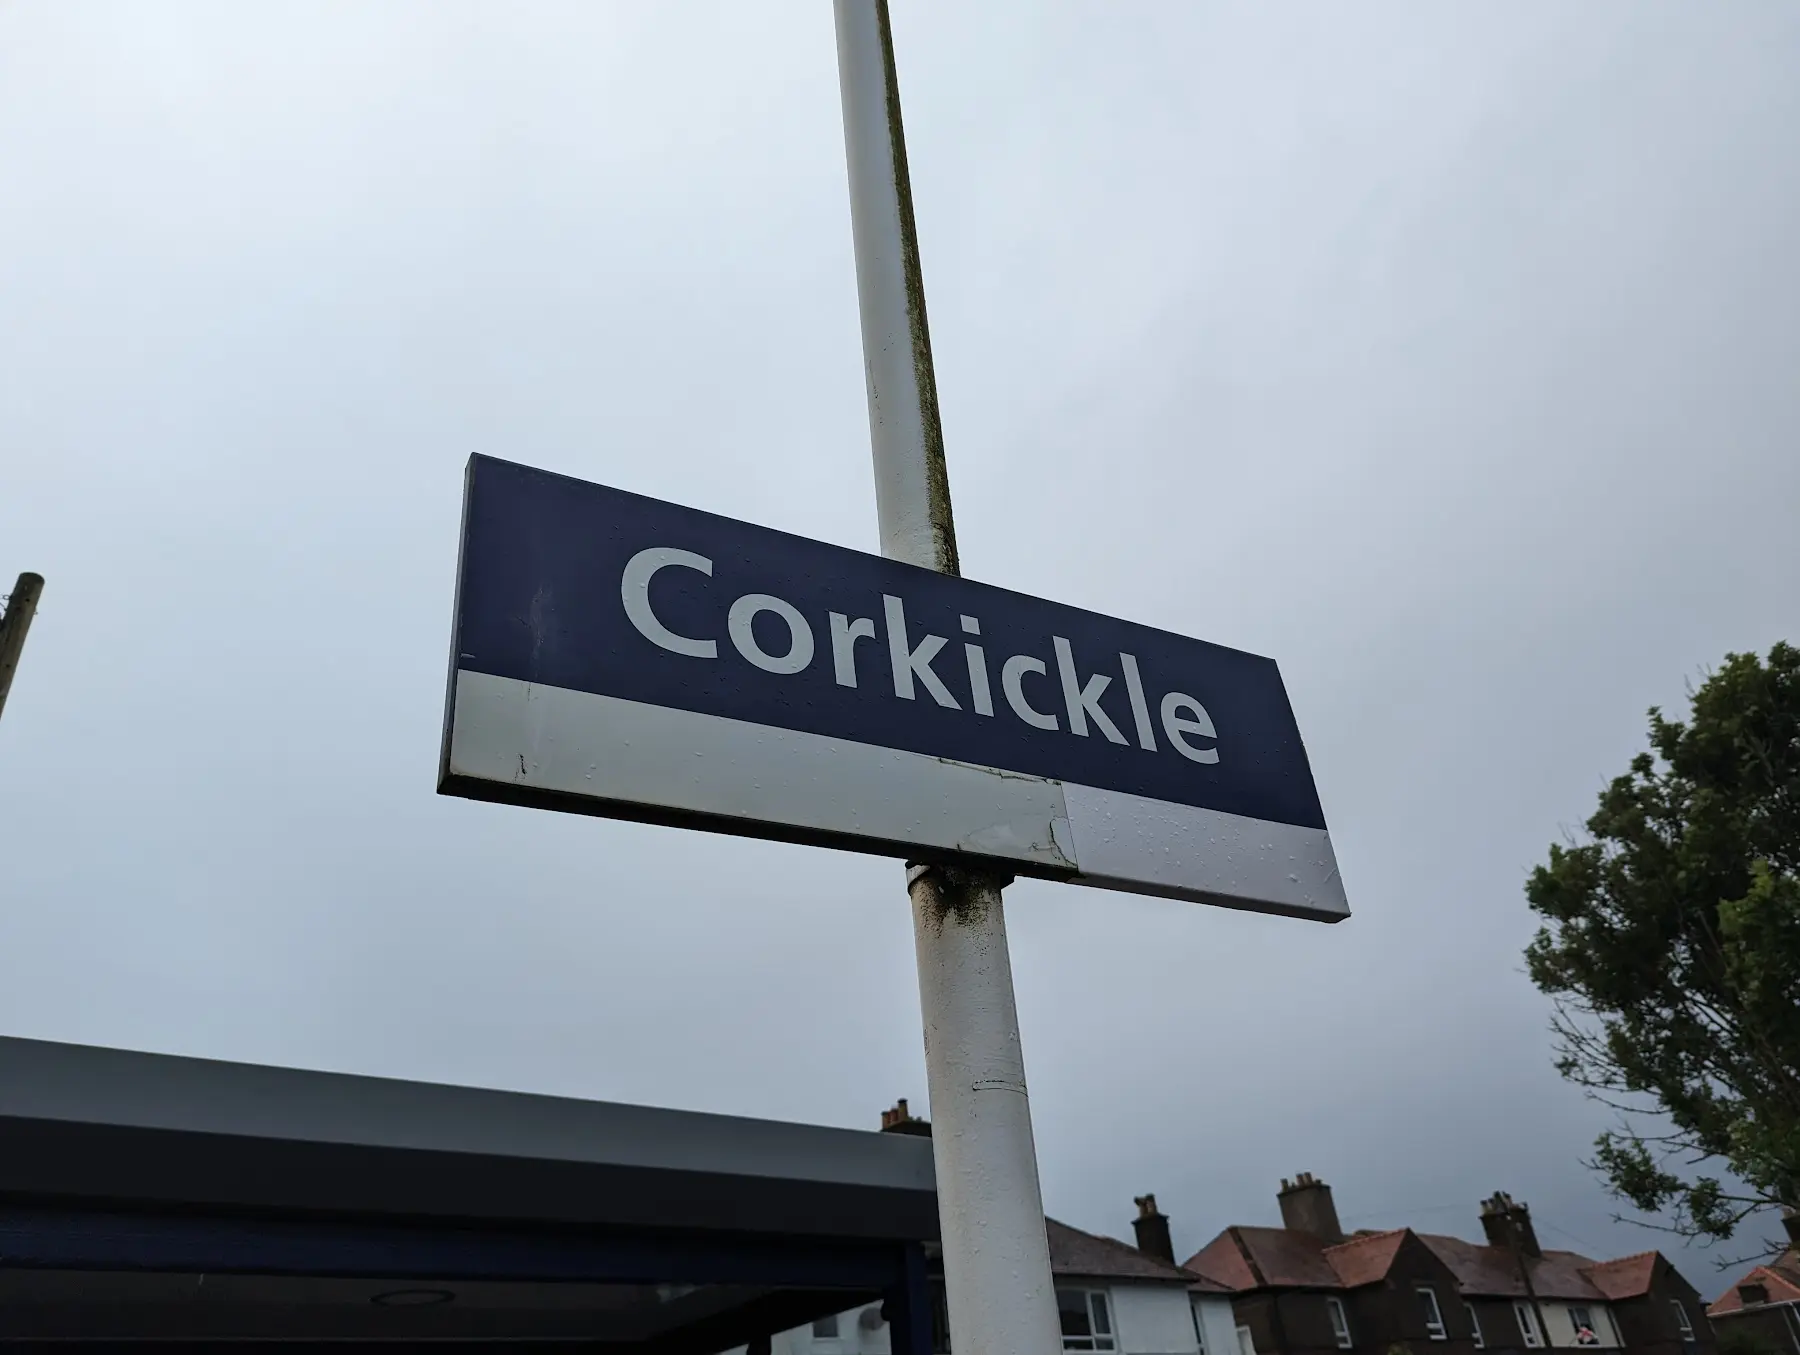 Corkickle